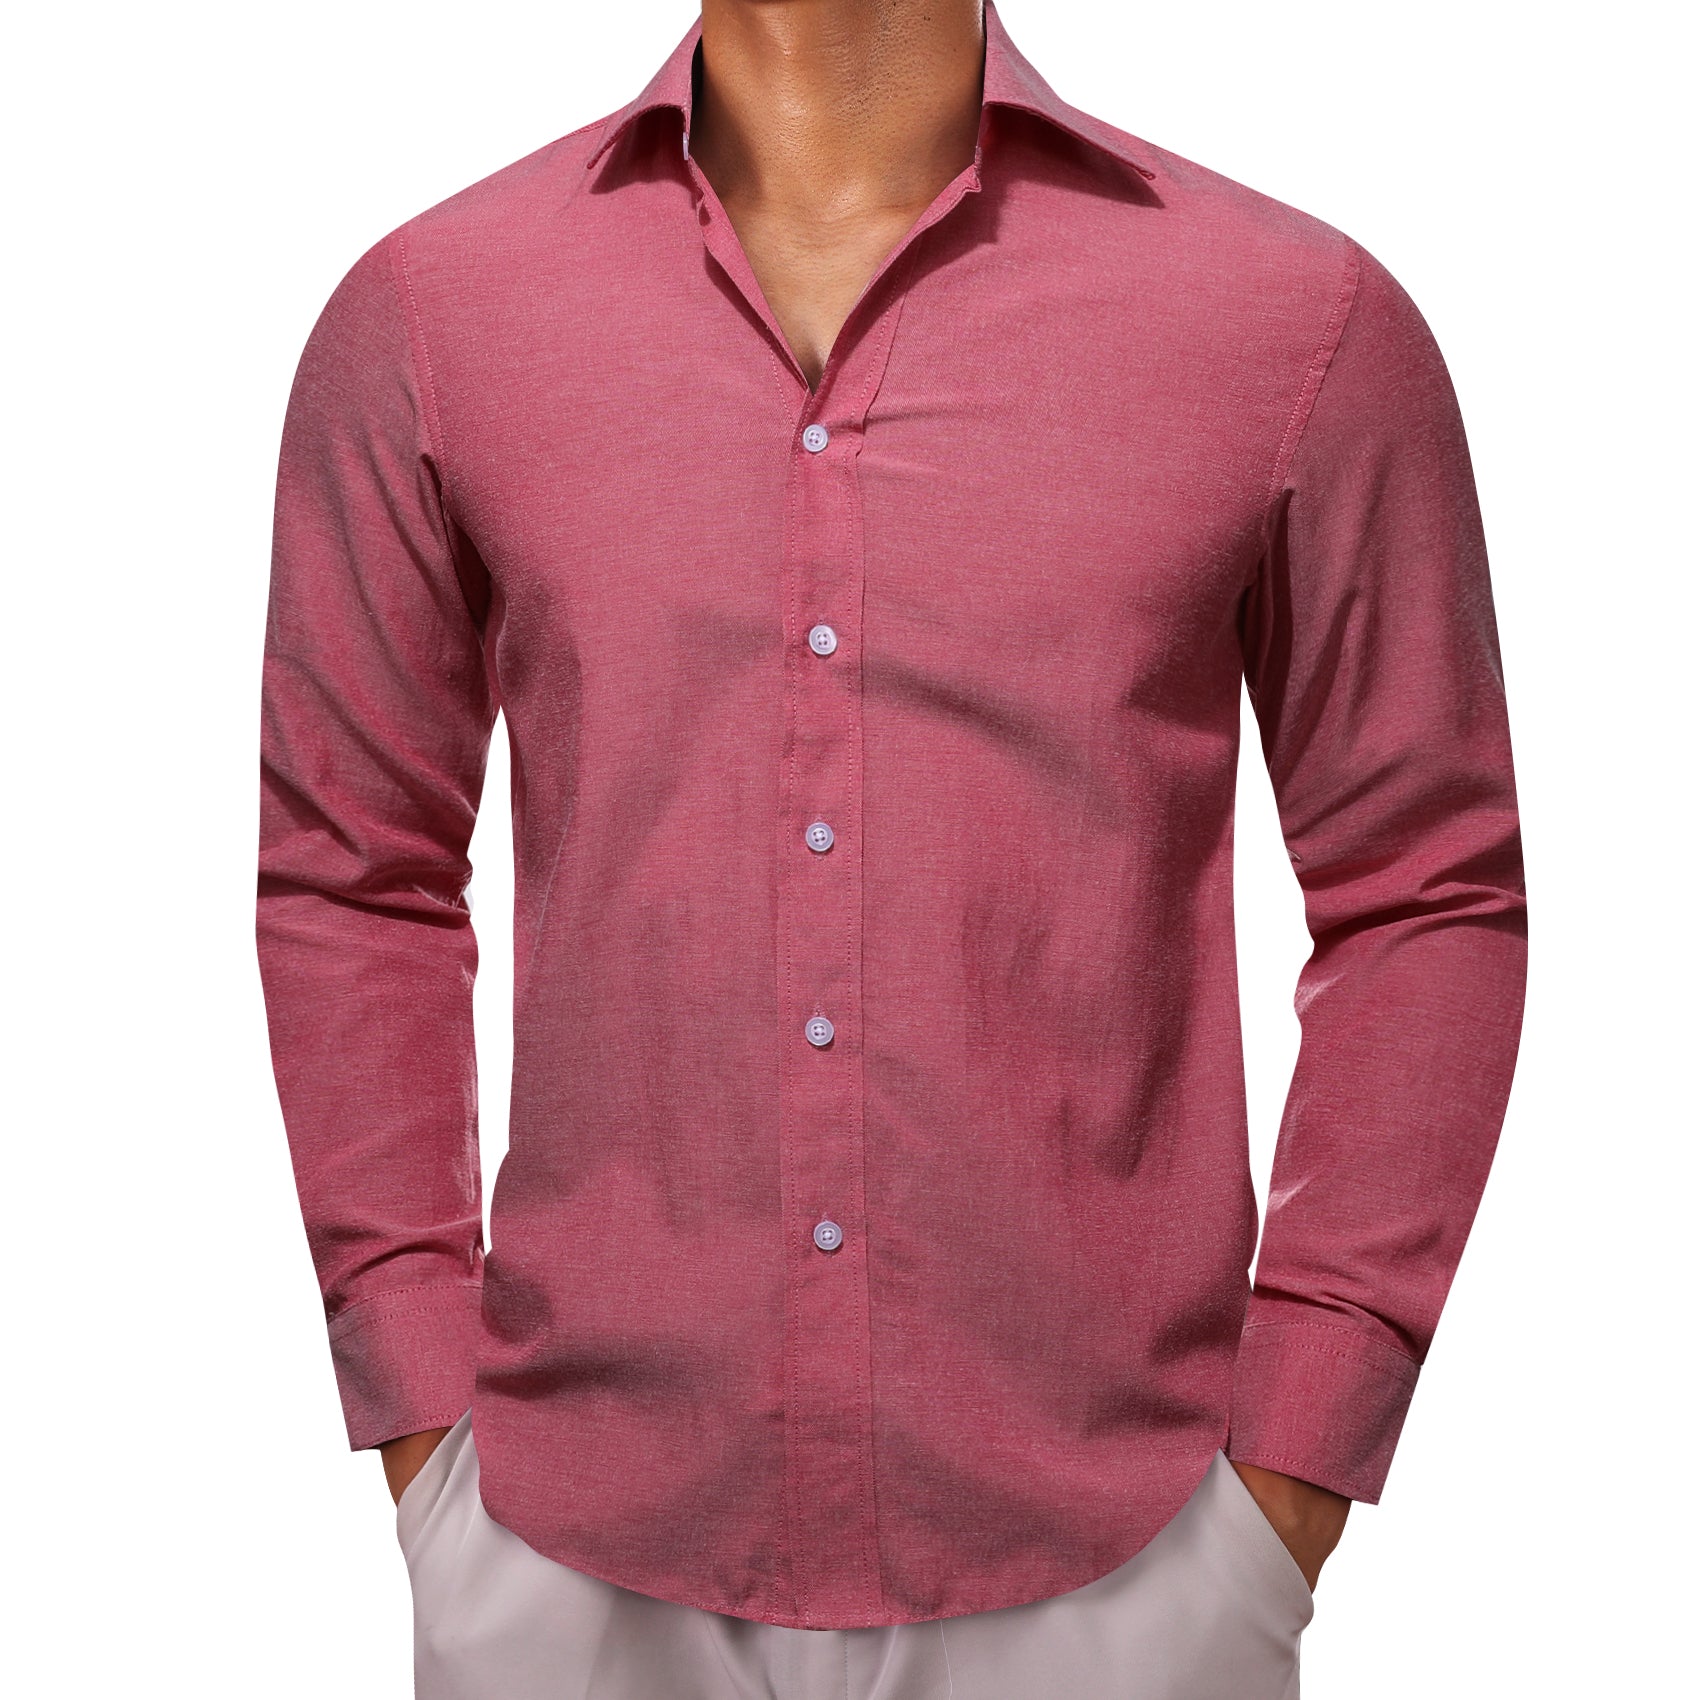 Barry.Wang Button Down Shirt Indian Red Solid Silk Shirt for Men